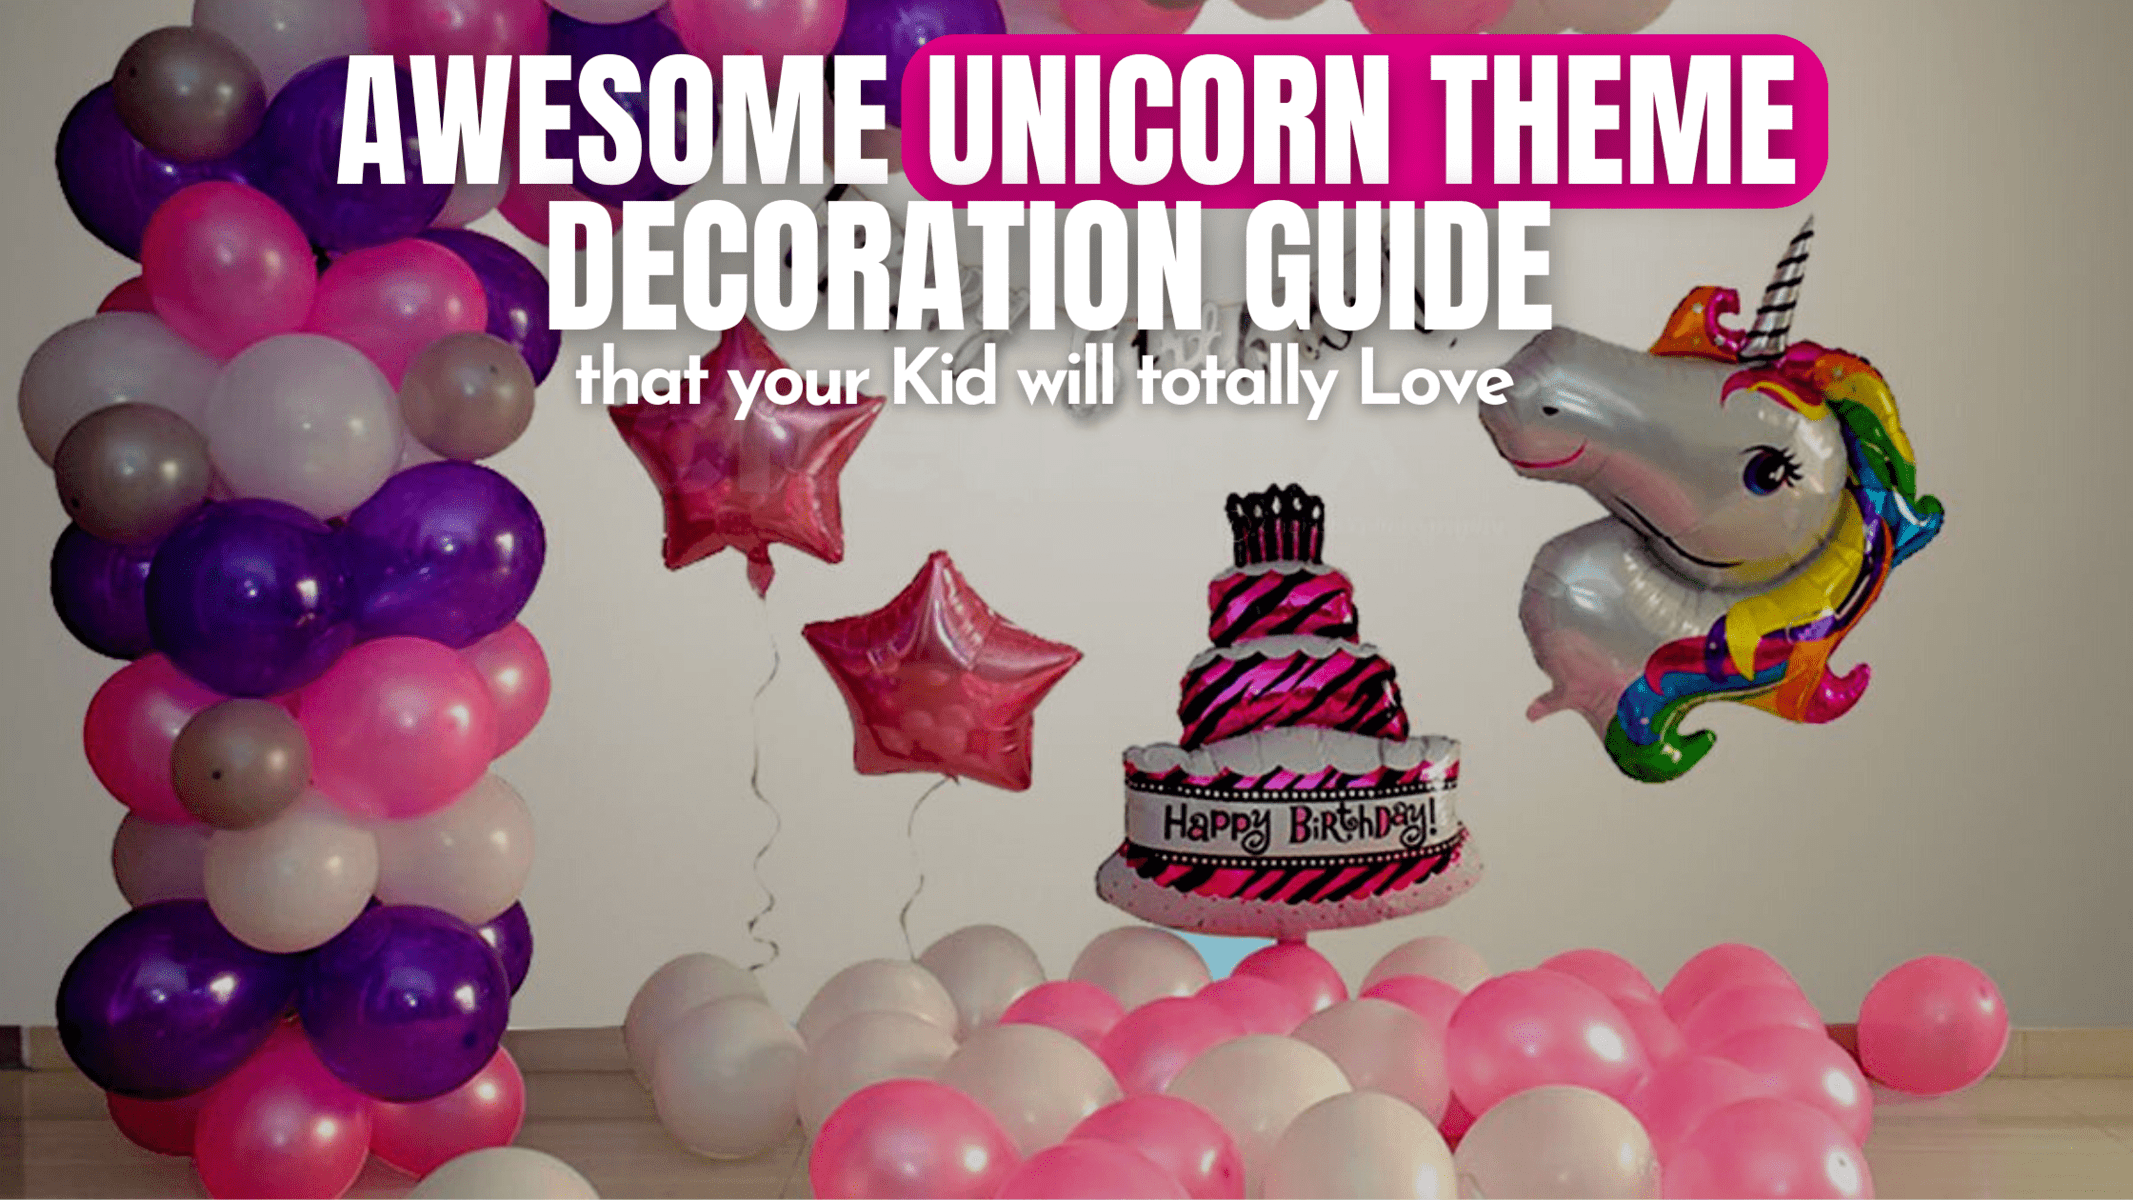 Unicorn theme birthday decoration